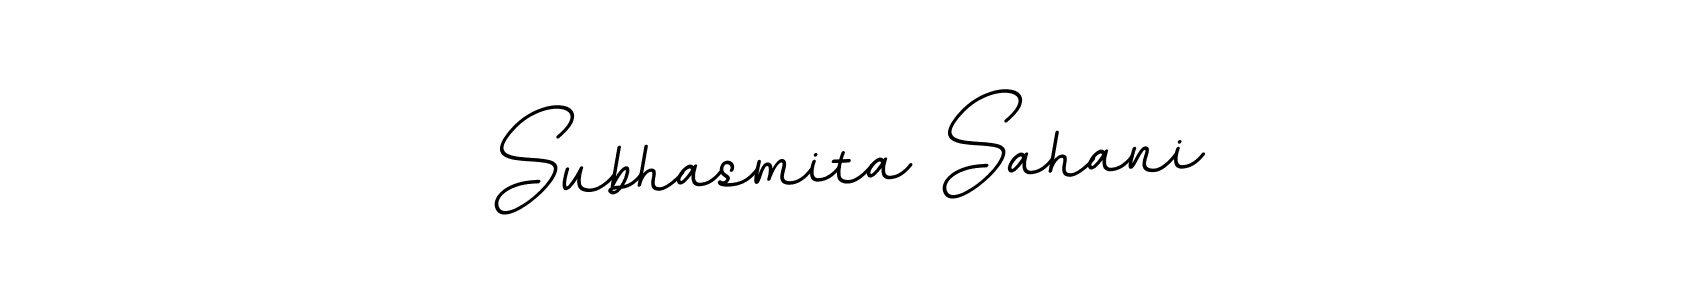 Make a beautiful signature design for name Subhasmita Sahani. Use this online signature maker to create a handwritten signature for free. Subhasmita Sahani signature style 11 images and pictures png